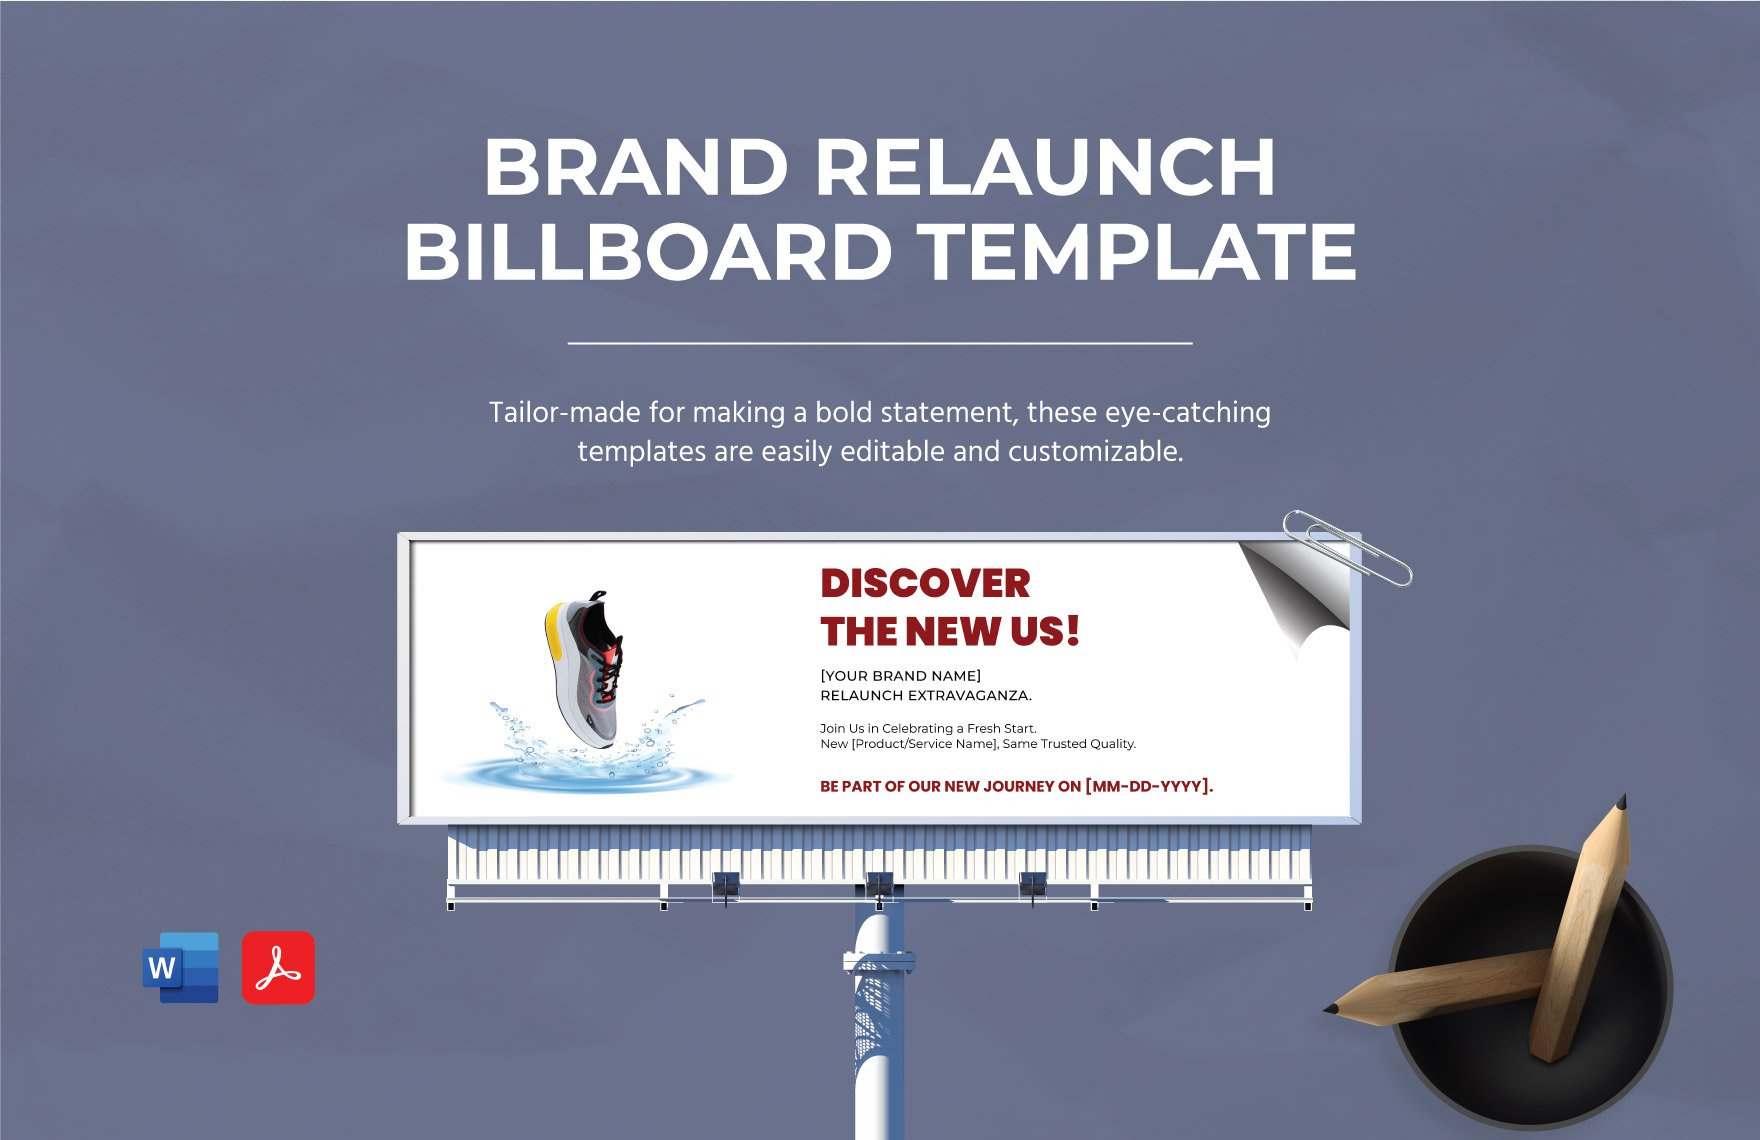 Brand Relaunch Billboard Template